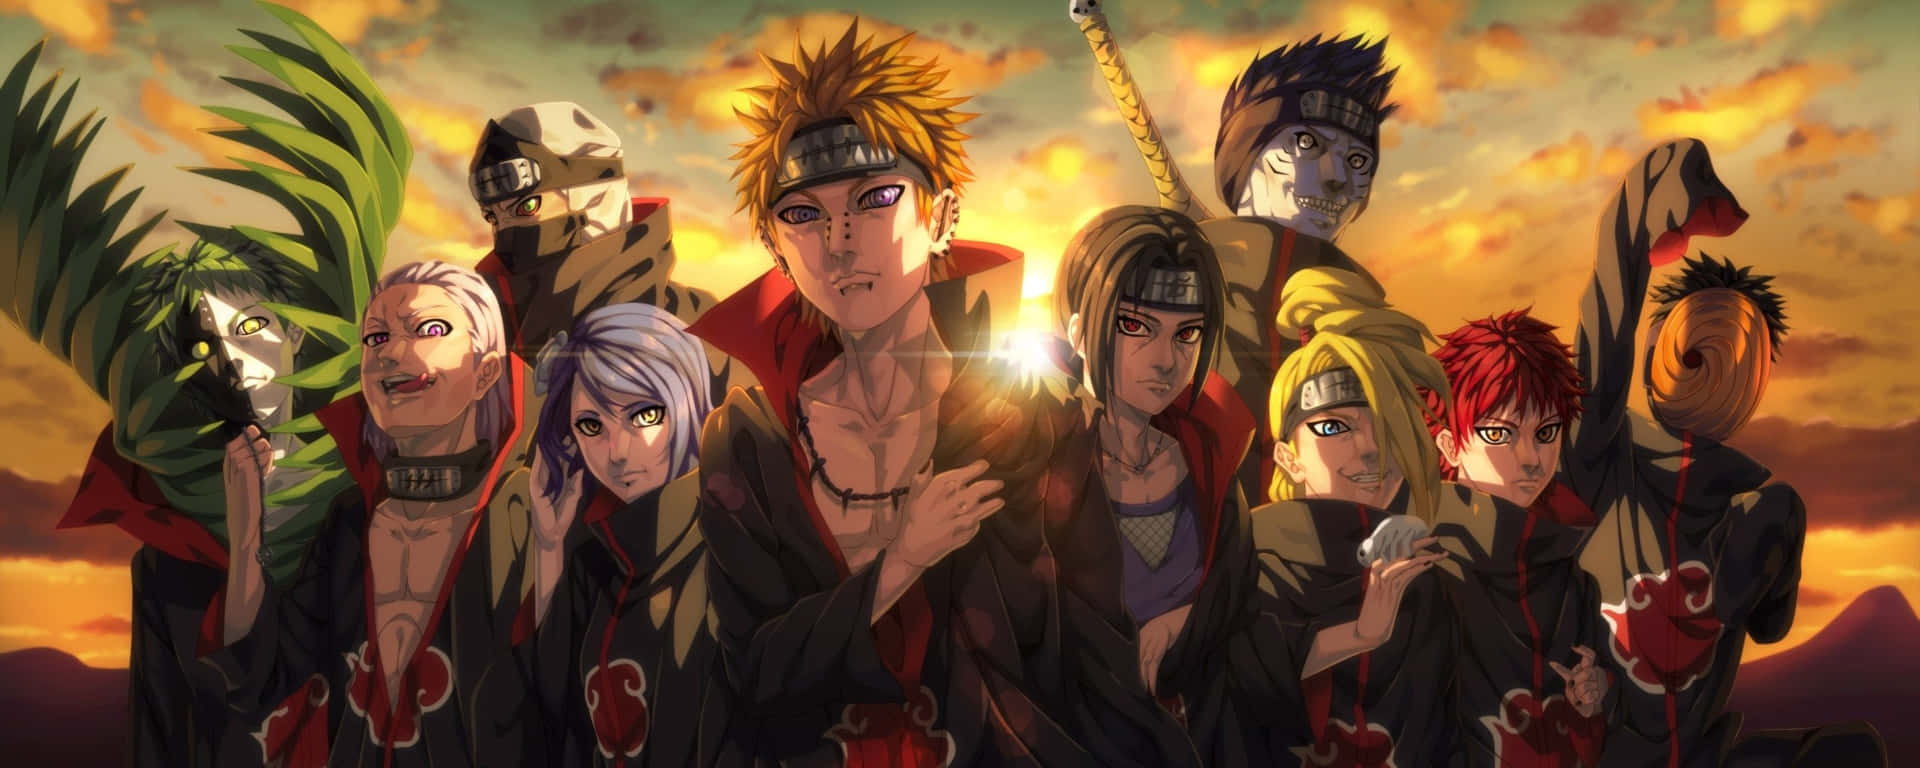 Naruto, Sasuke and Sakura - Three Legendary Shinobi Wallpaper